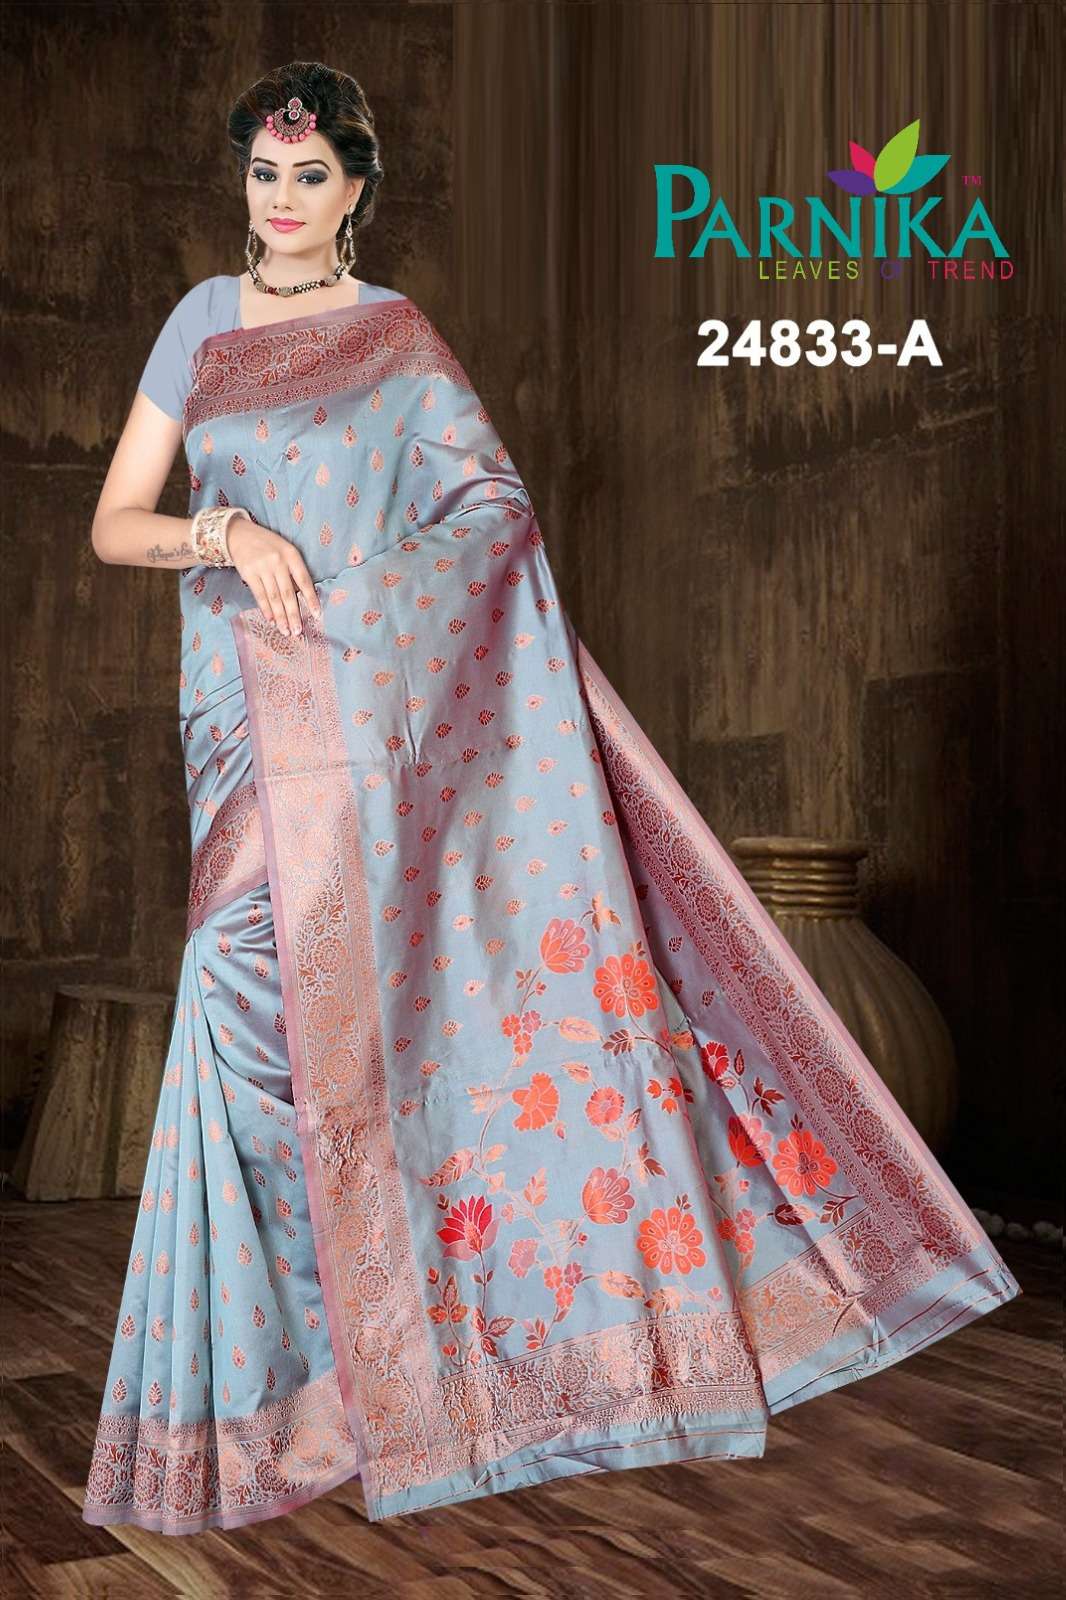 Parnika India Lichi Silk Jacquard Sarees Festive Wear Wedding Saree in Wholesale rate - 24833